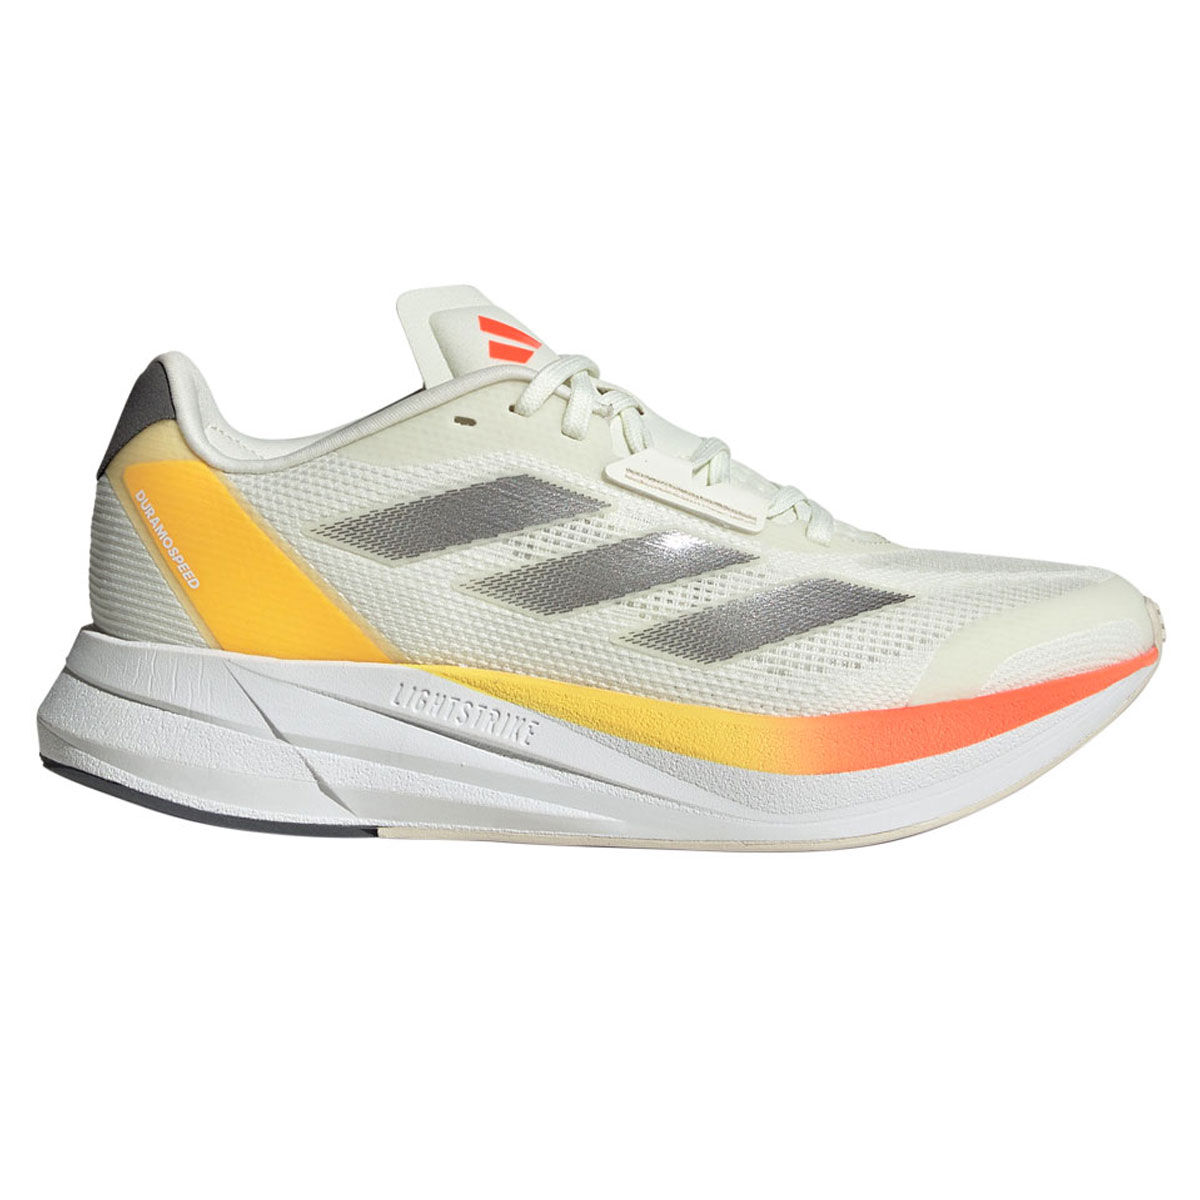 adidas Duramo Speed Womens Running Shoes, Tan/Red, rebel_hi-res